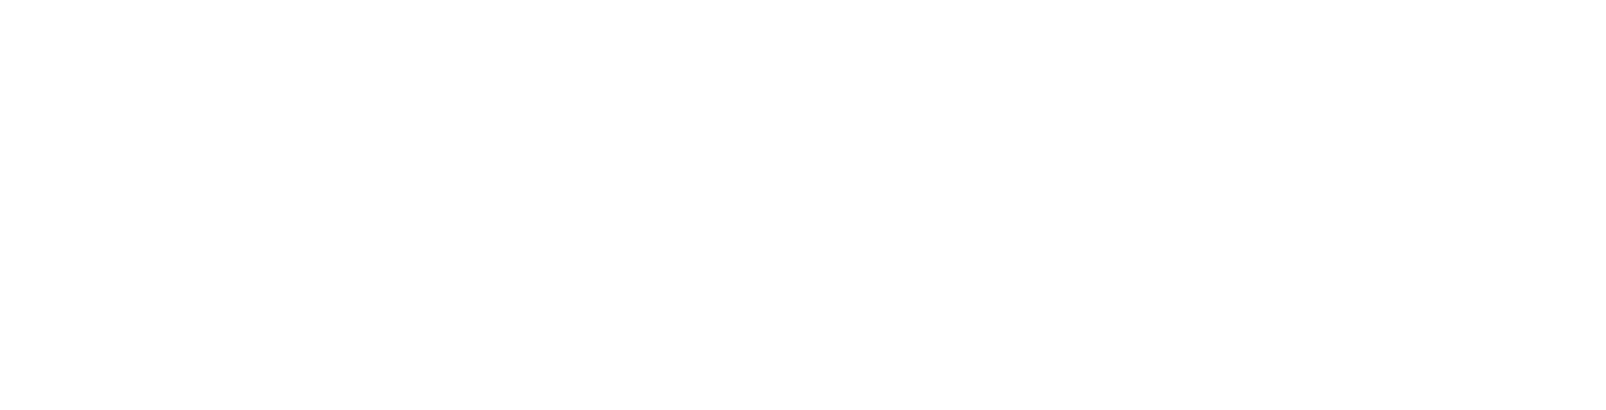 Keywords Studios Logo groß für dunkle Hintergründe (transparentes PNG)